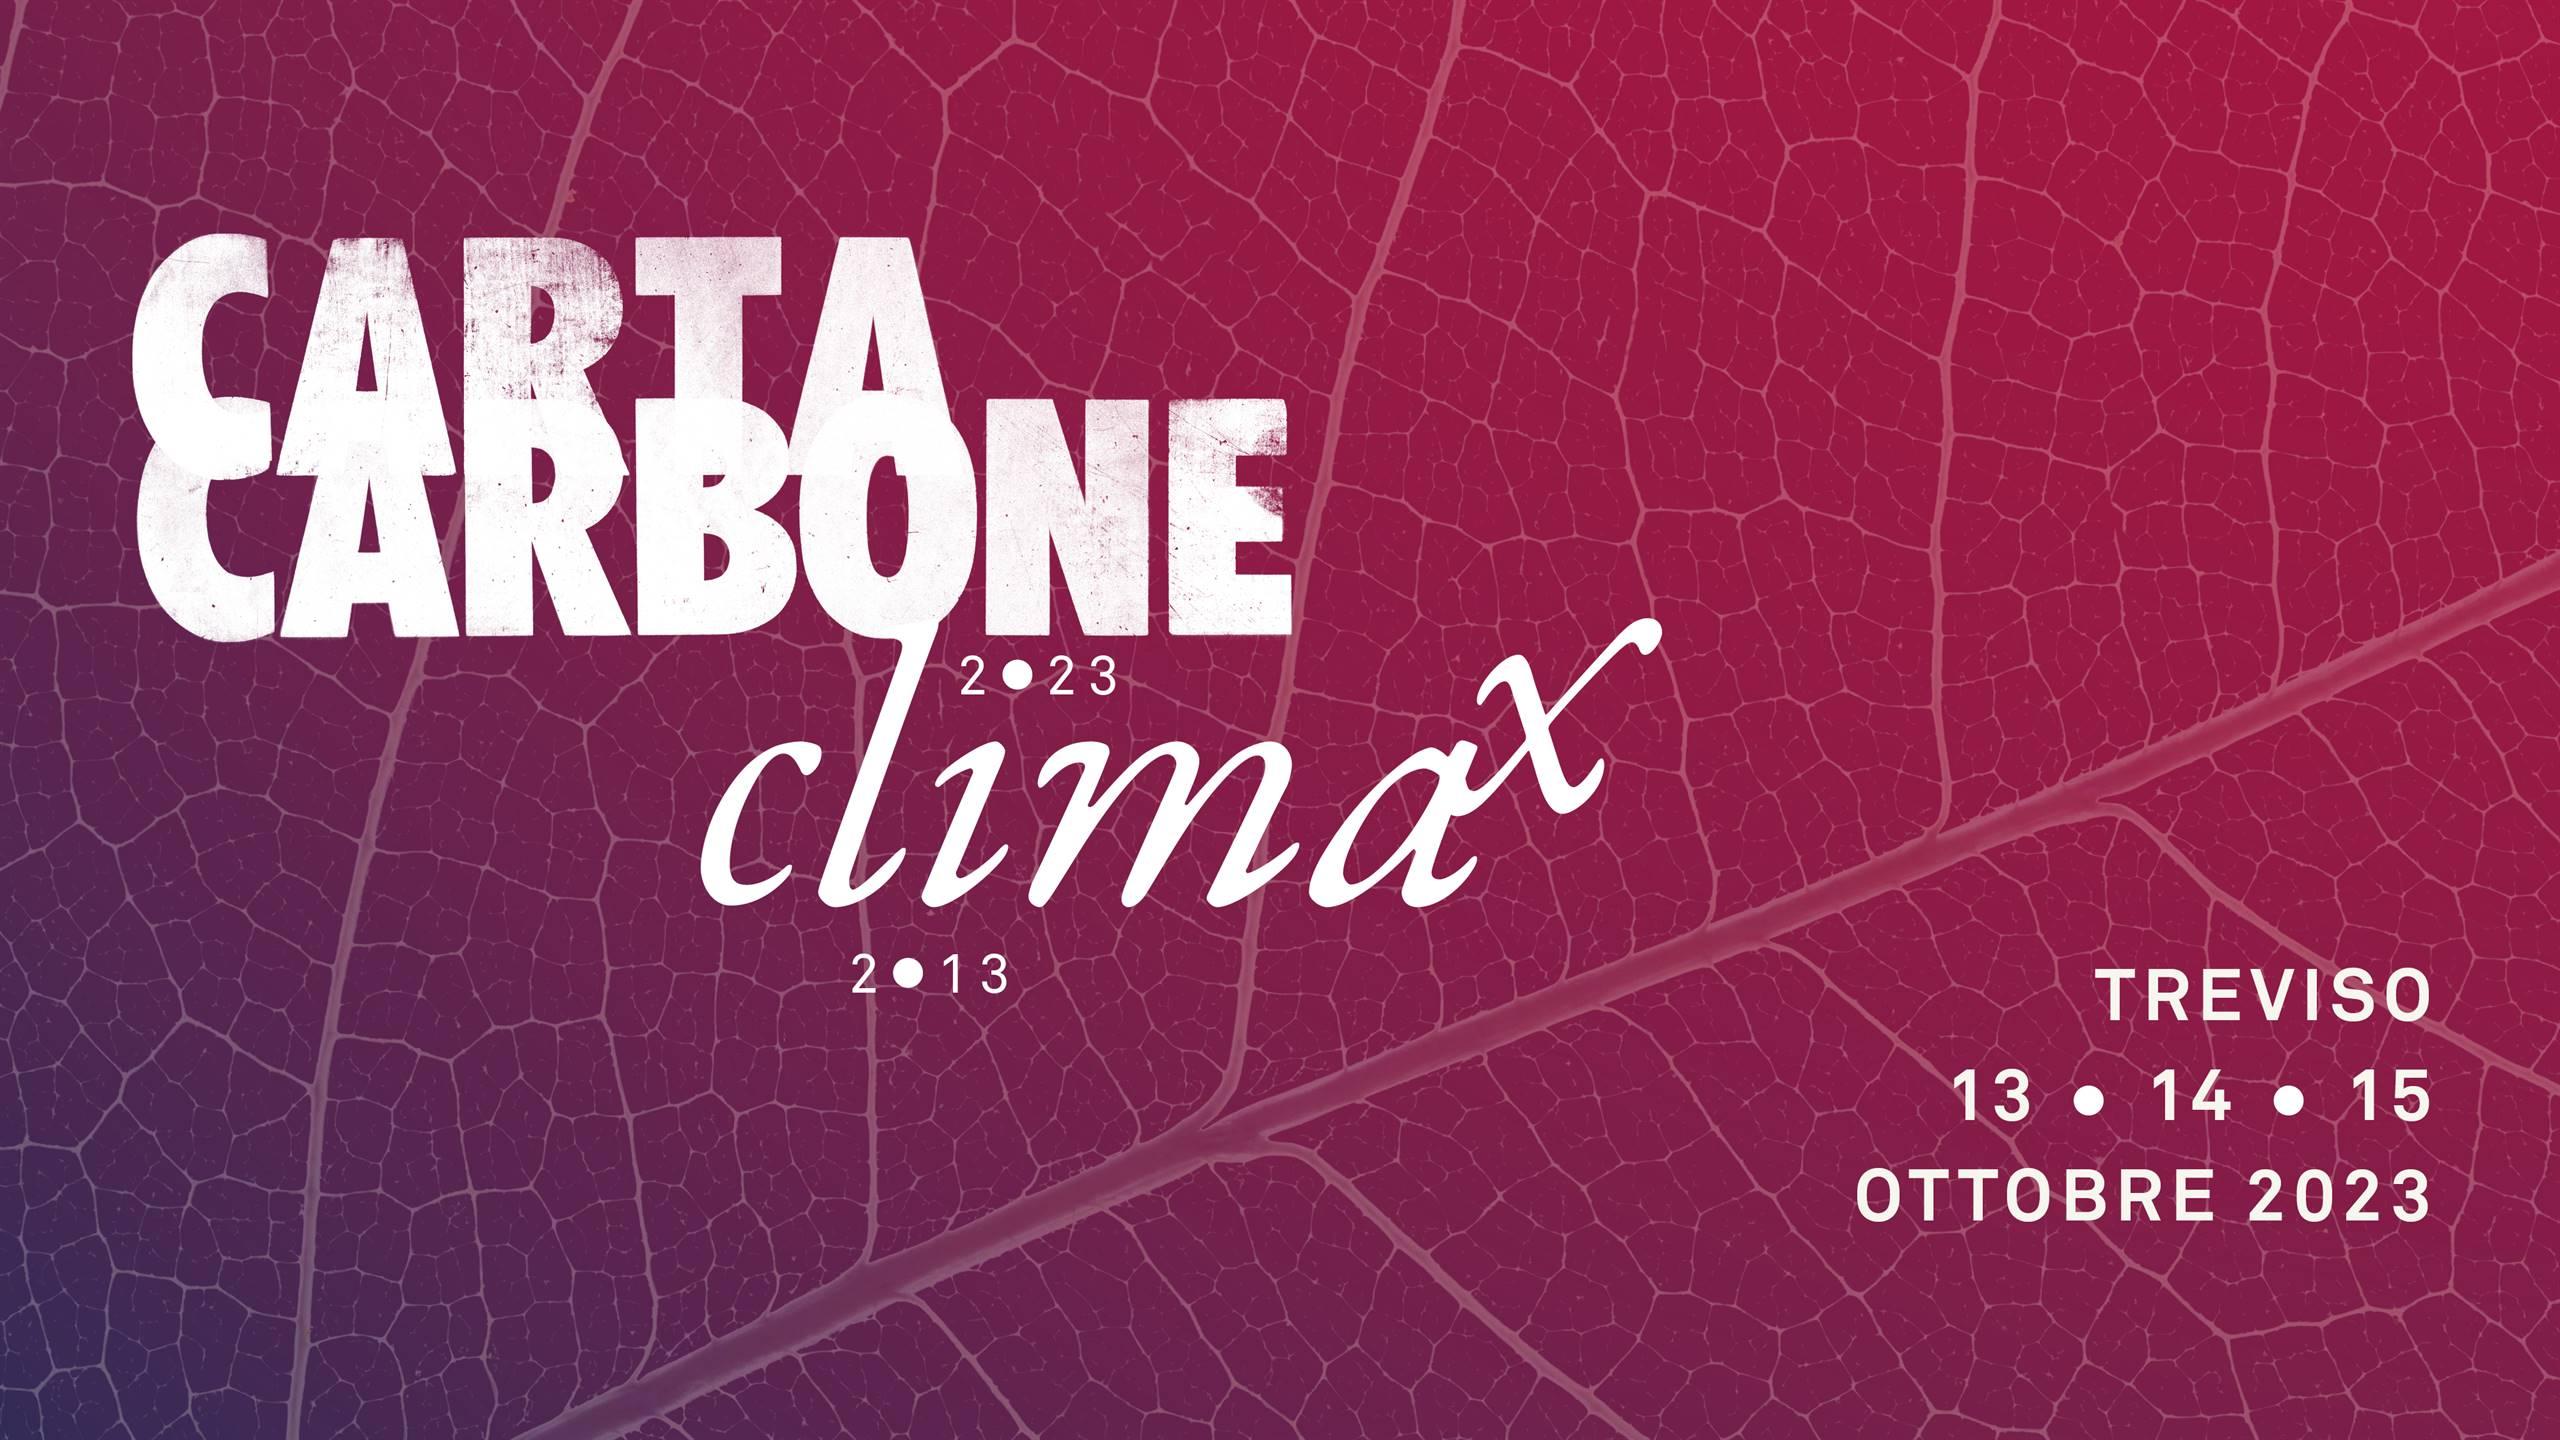 CartaCarbone Festival letterario - Clima_Climax 